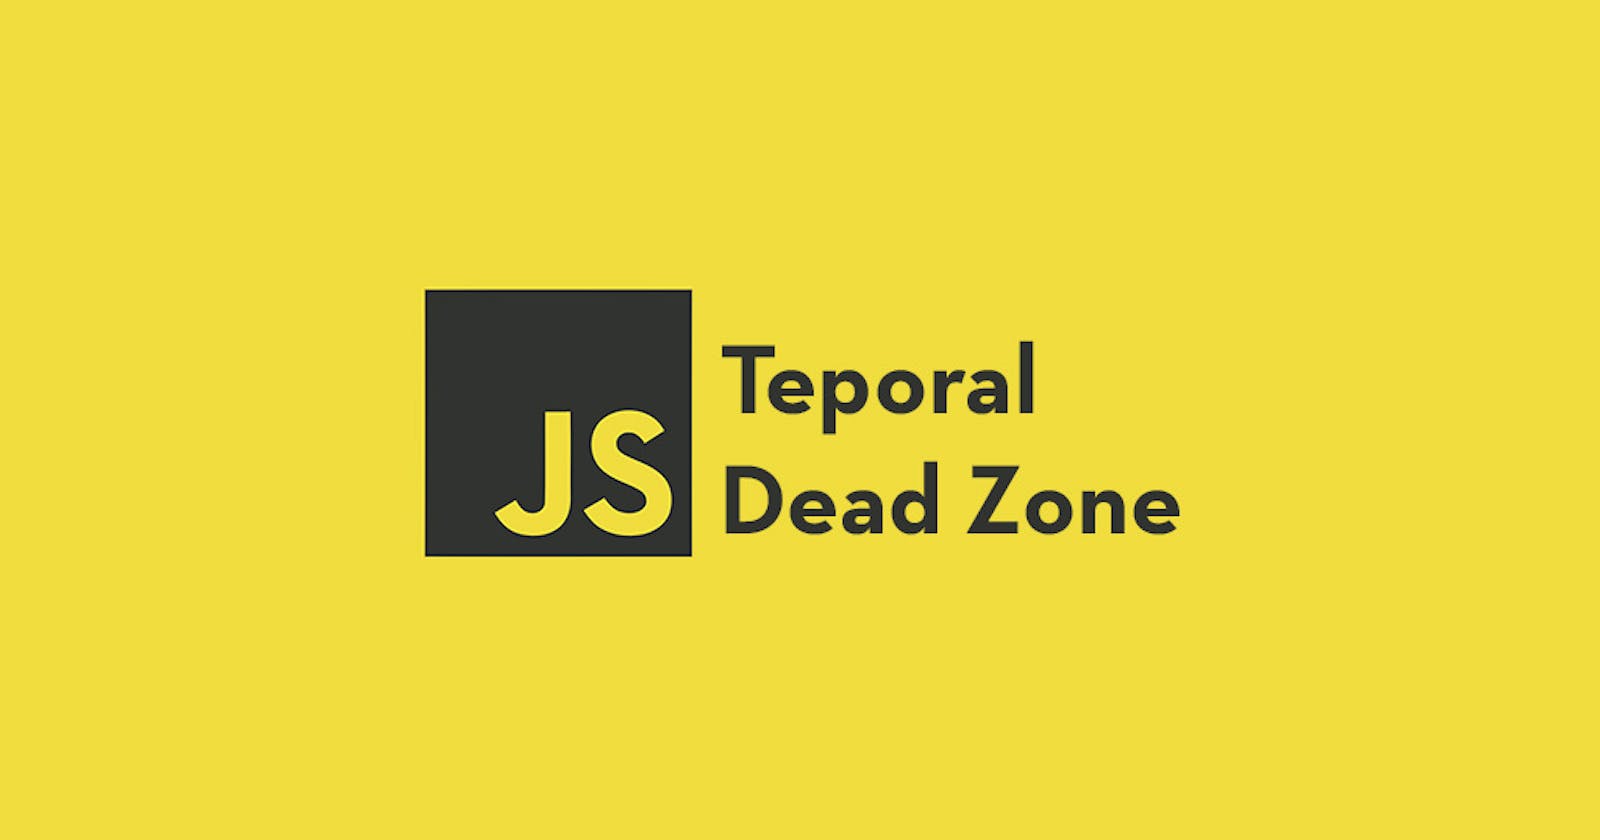 [JavaScript] Deep Dive into Temporal Dead Zone (TDZ)